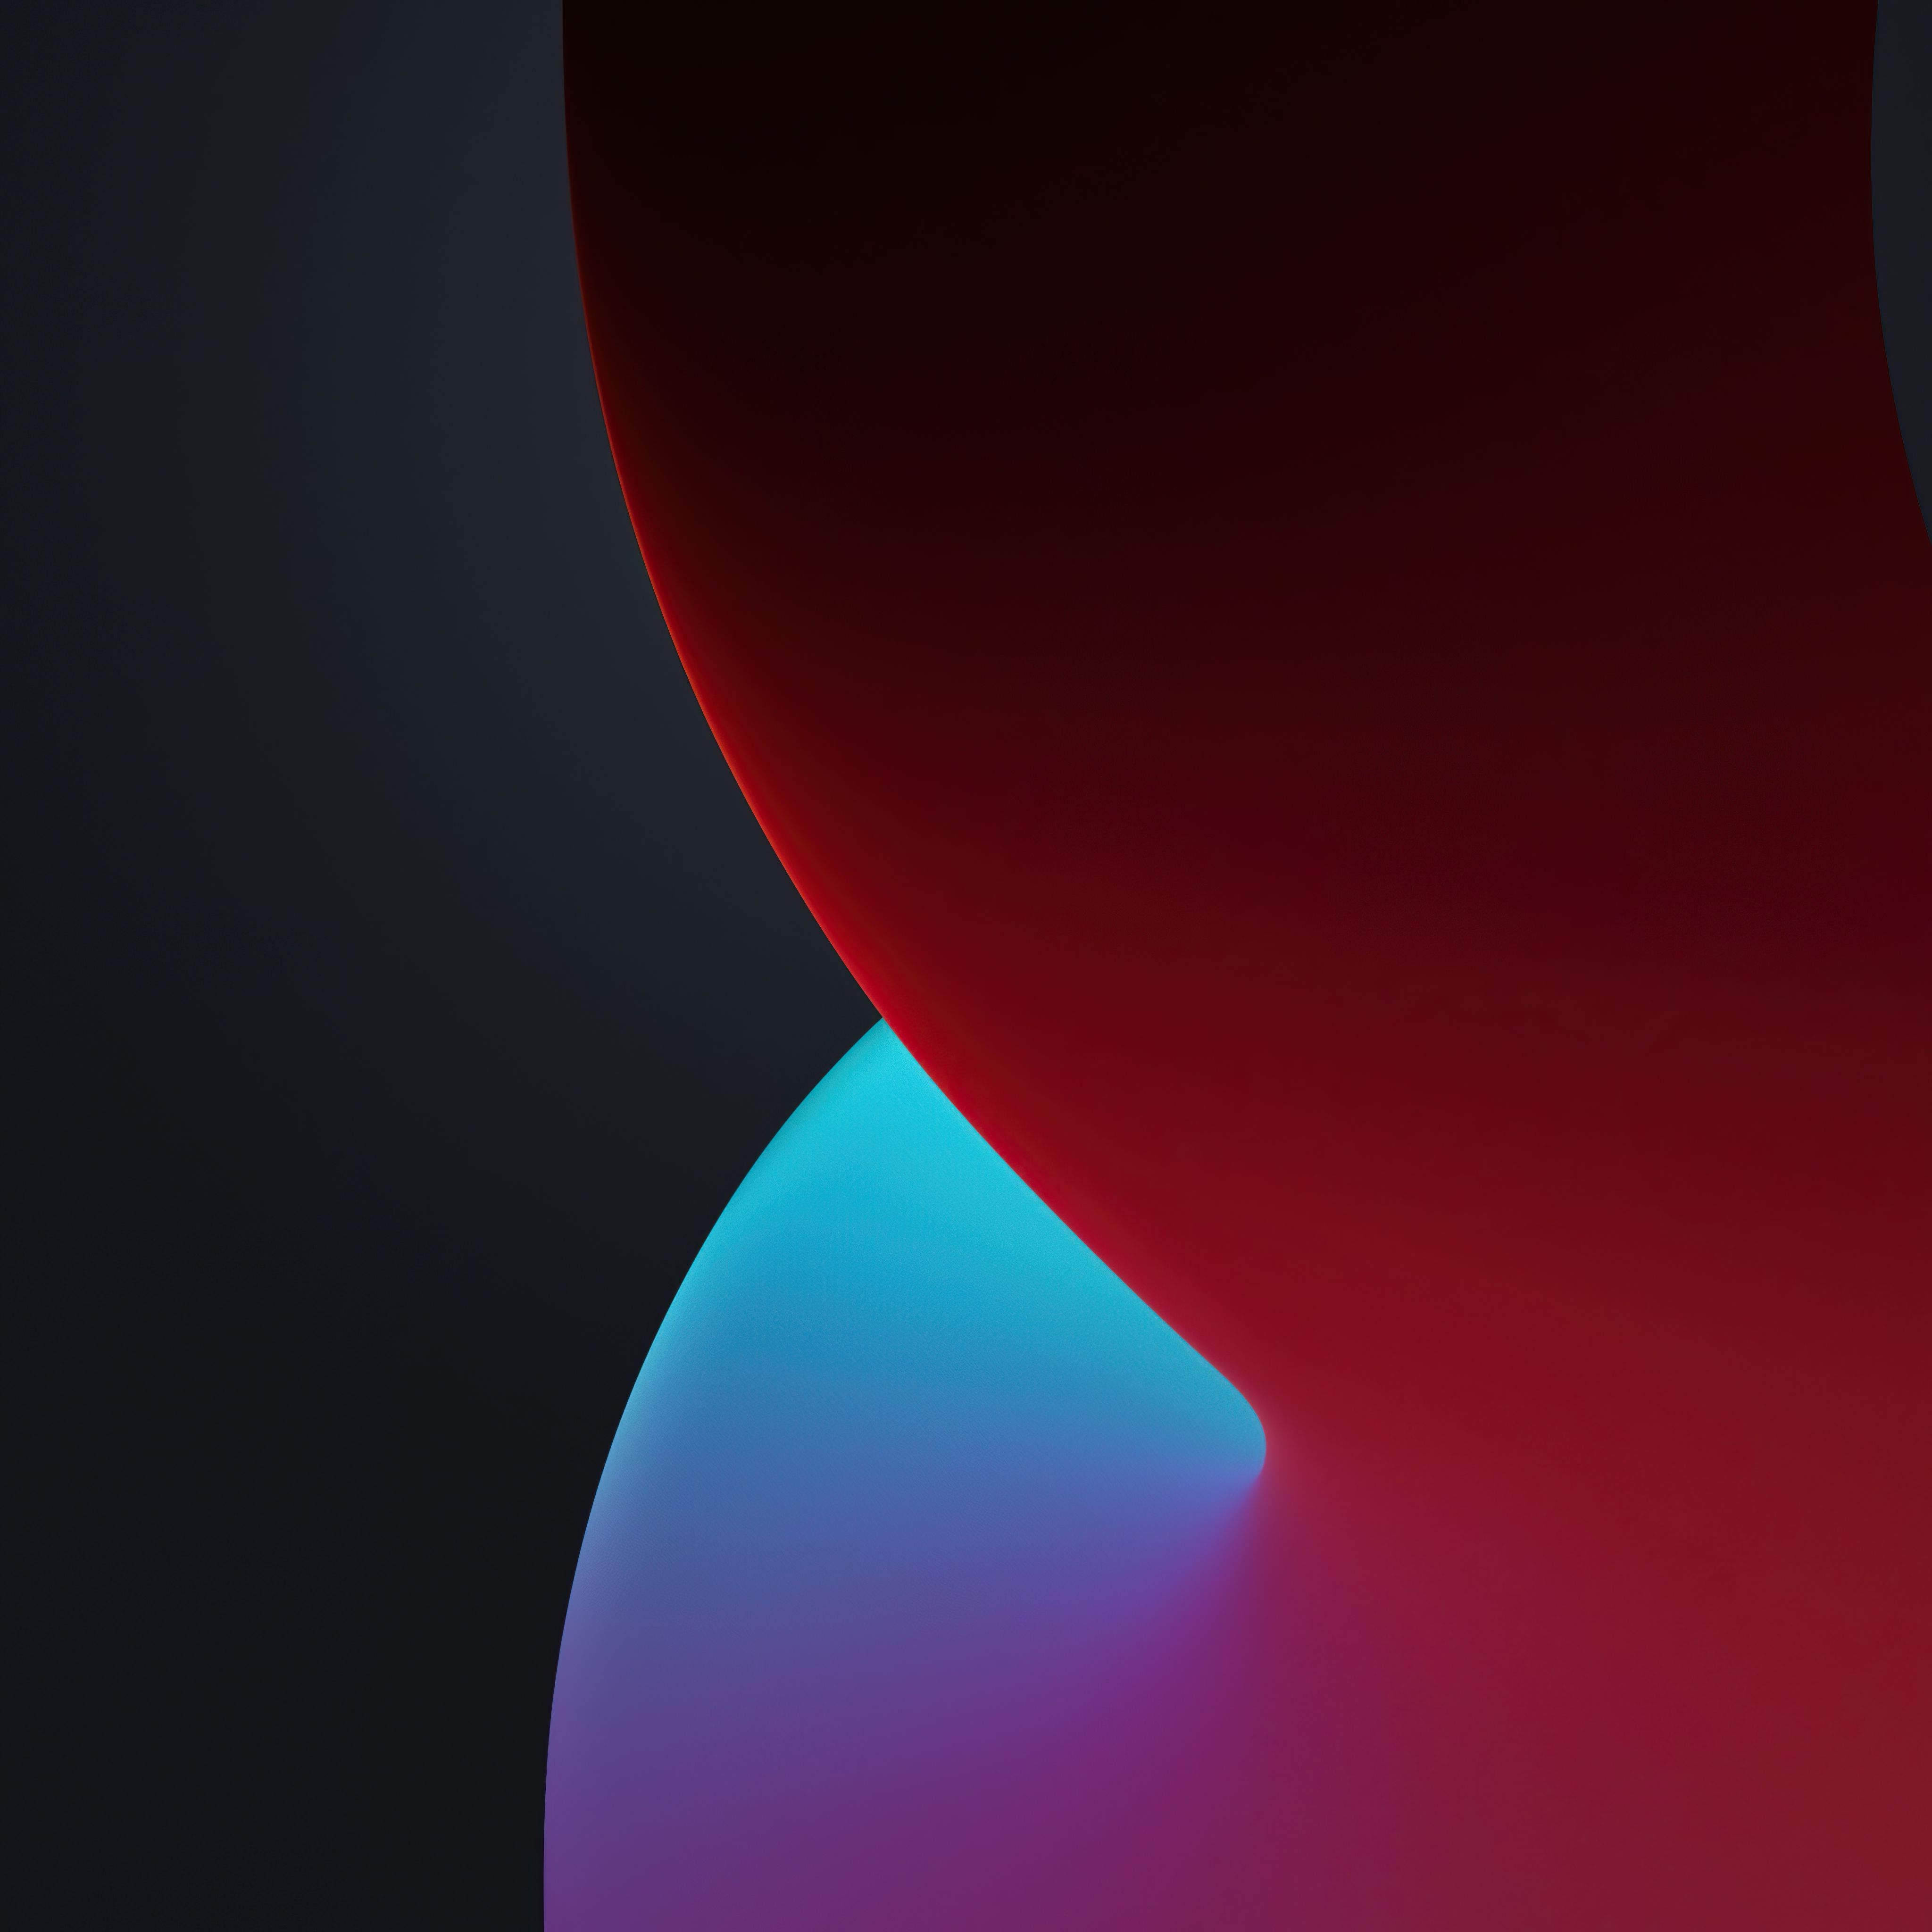 iOS 14 Wallpaper 4K, WWDC, iPhone iPadOS, Dark, Red, Stock, Gradients